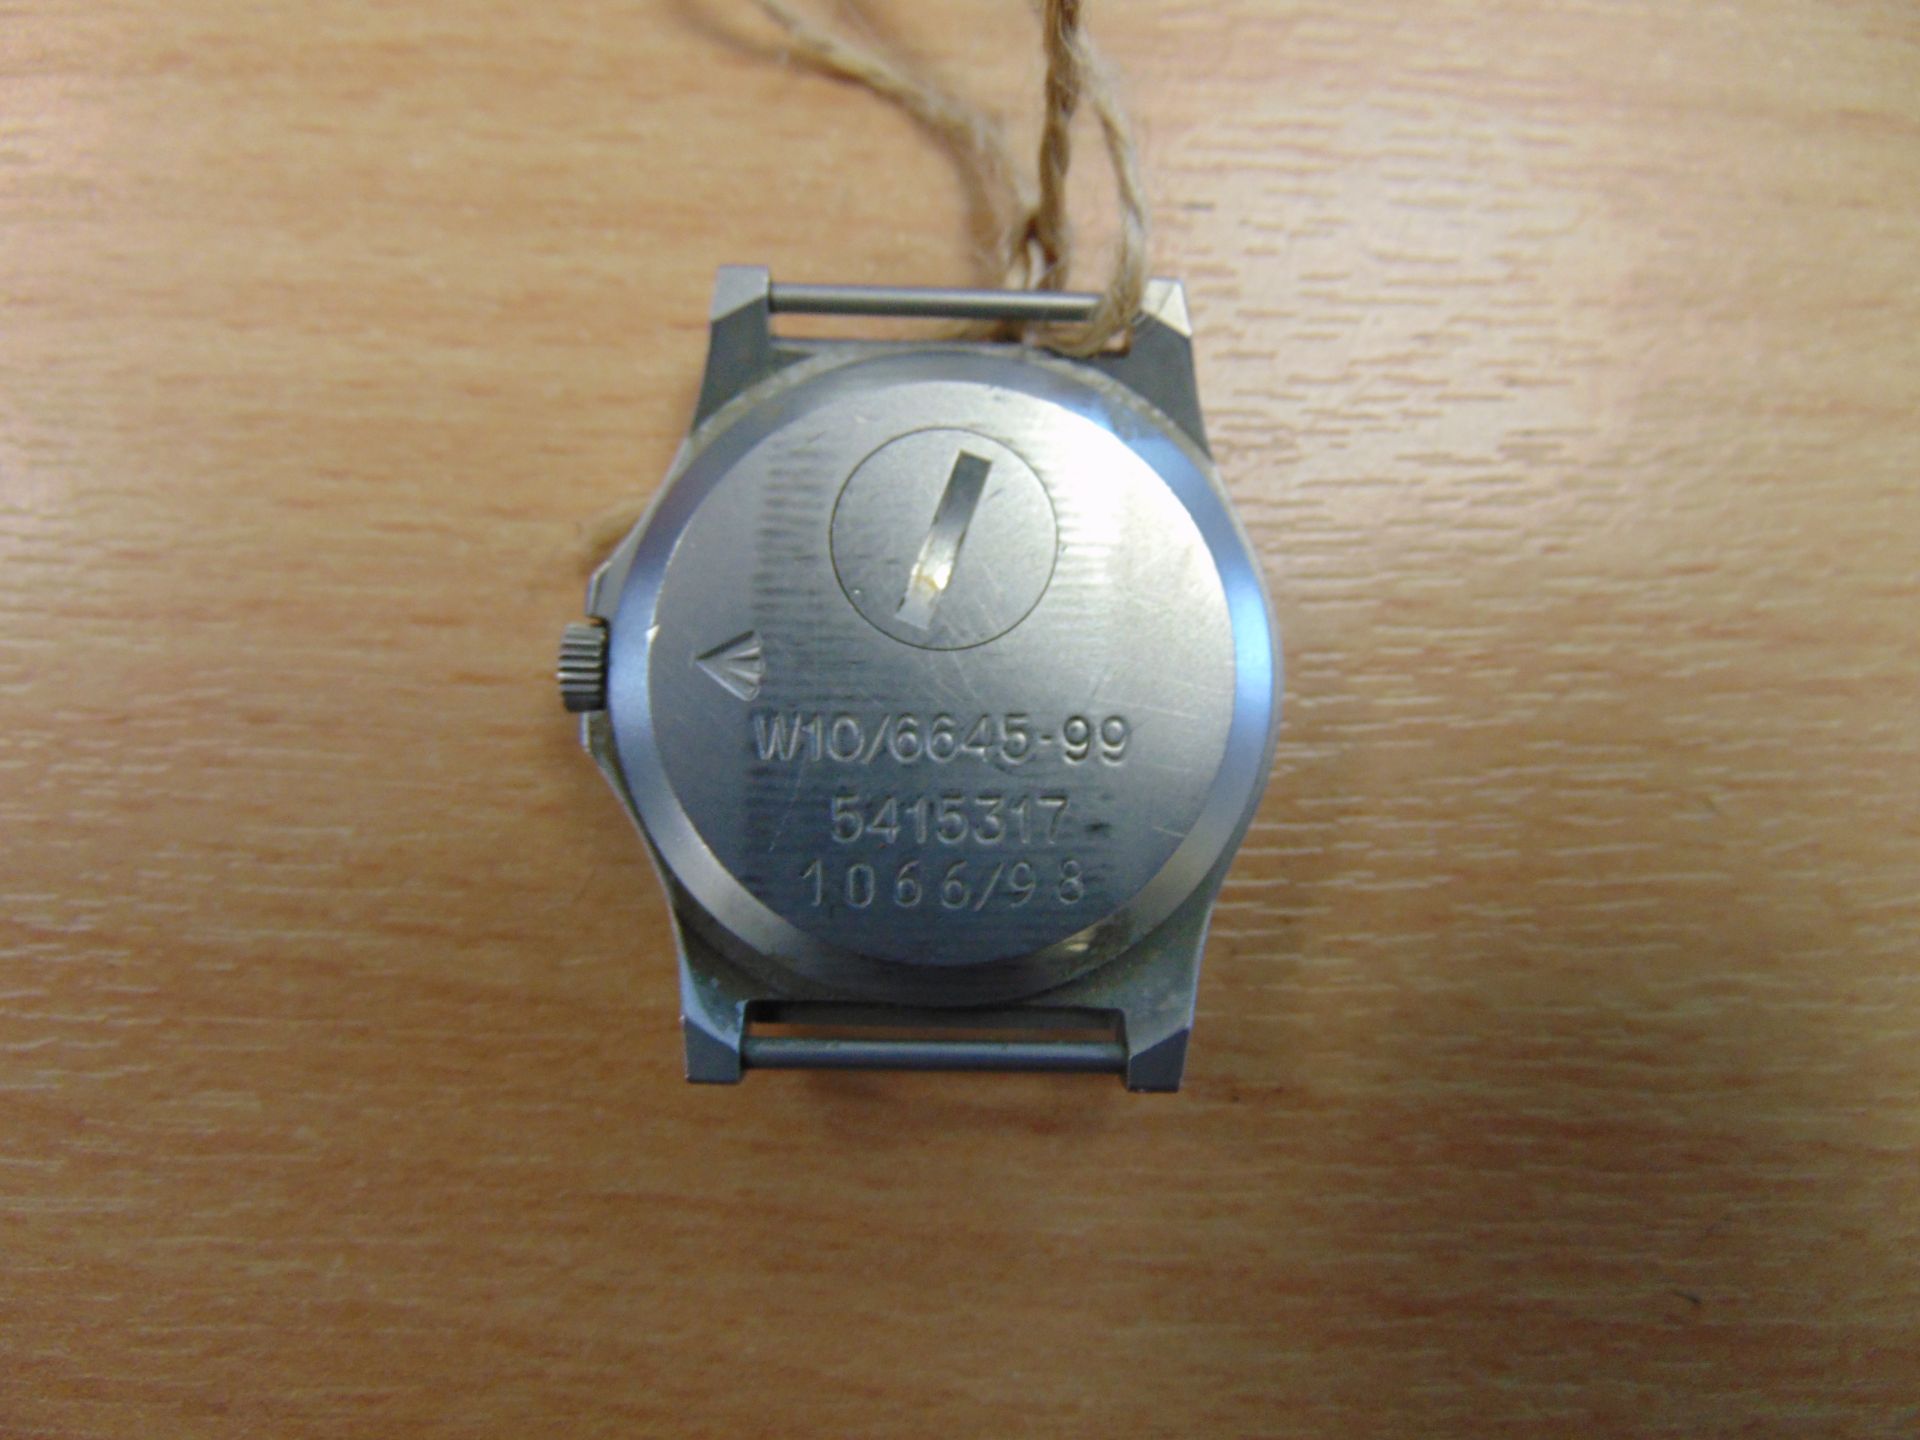 CWC (Cabot Watch Co Switzerland) British Army W10 Service Watch, SNo 1066, Date 1998 - Image 3 of 4